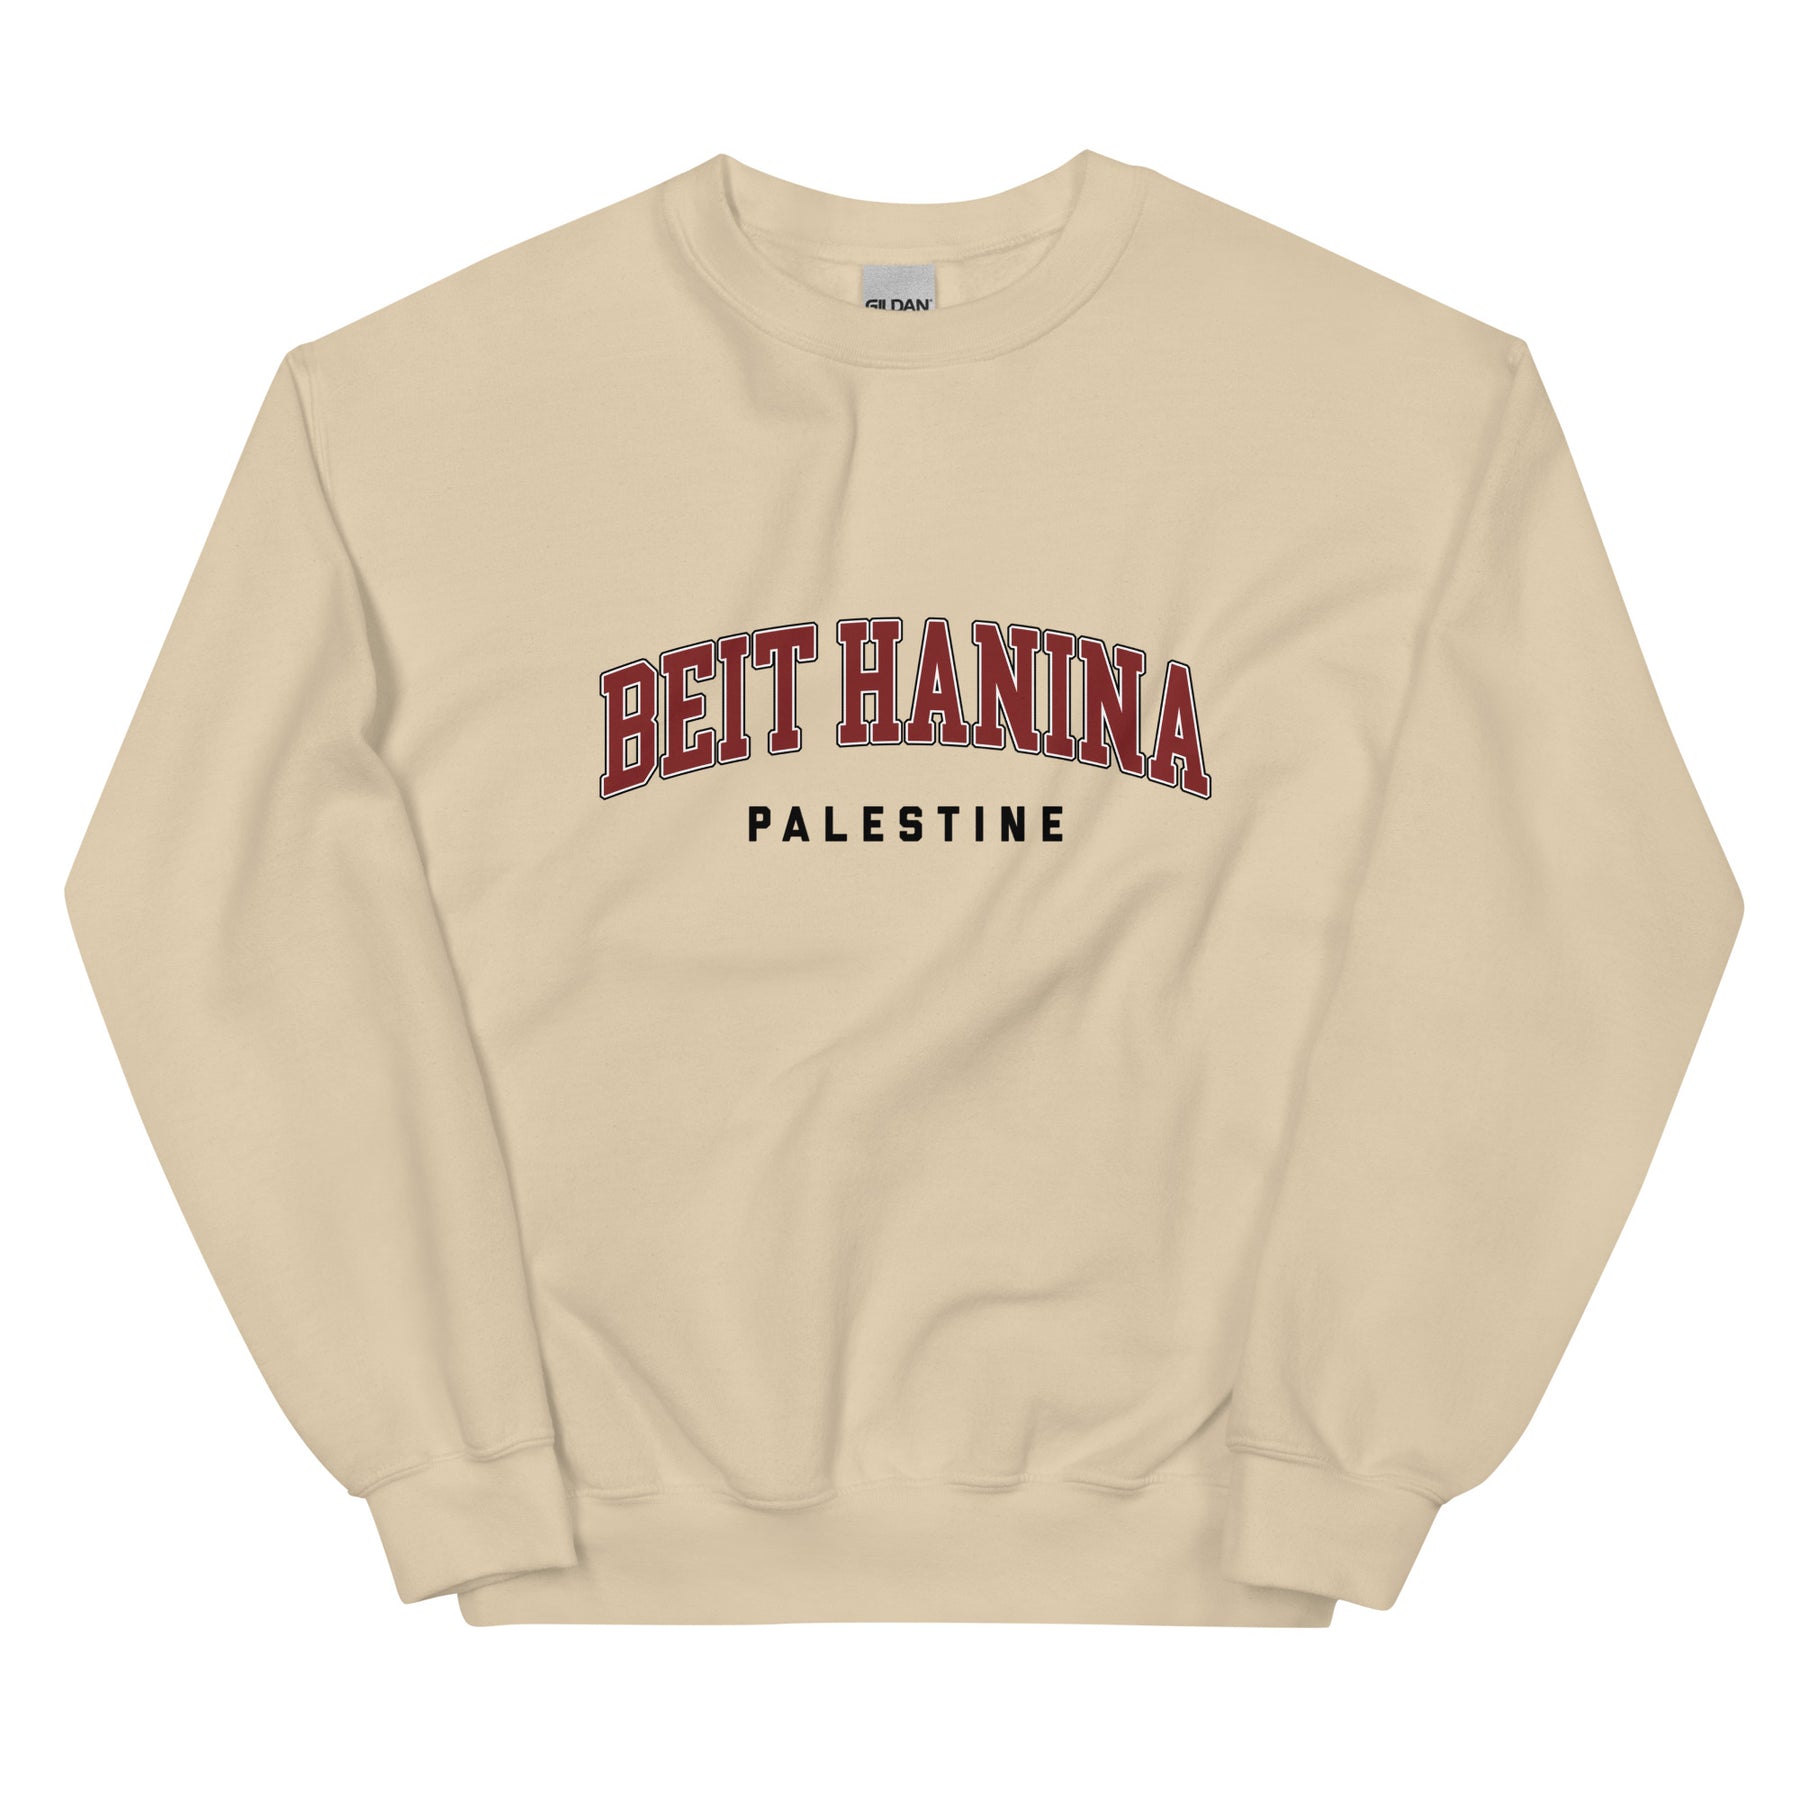 Beit Hanina, Palestine - Sweatshirt